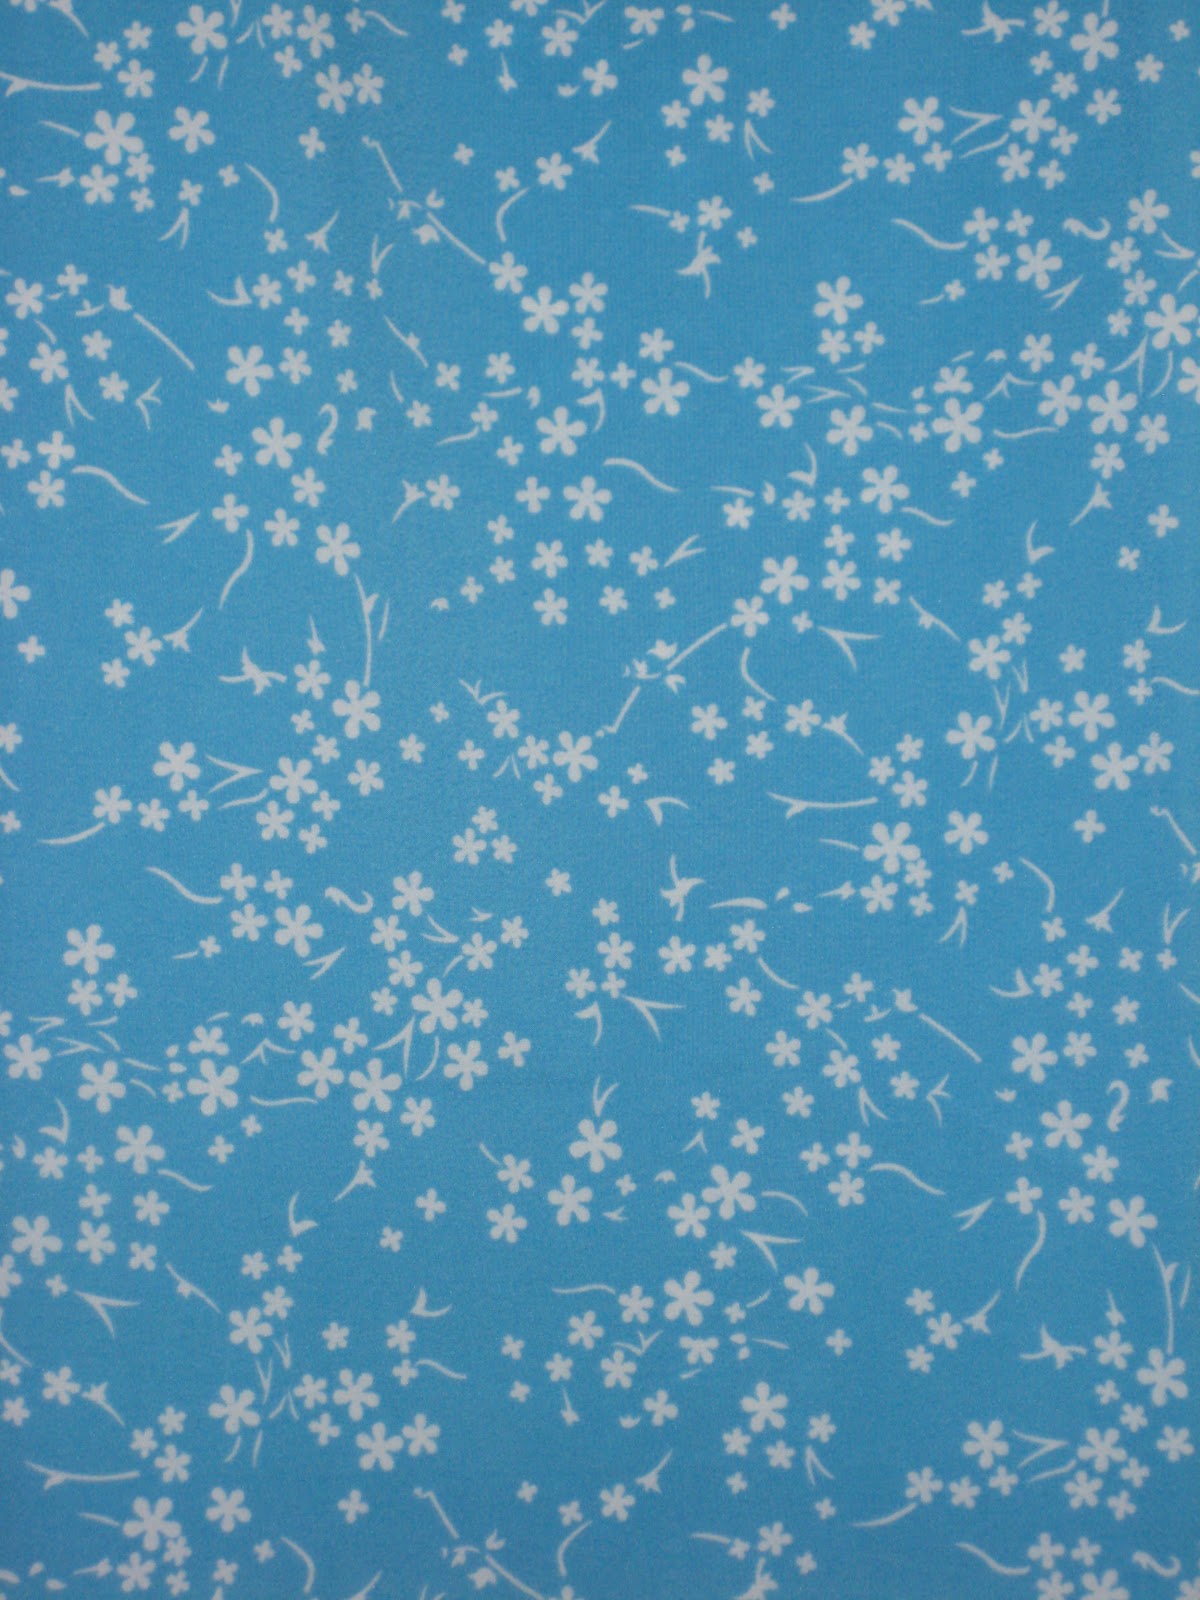 tapete biru muda,blau,muster,aqua,türkis,design